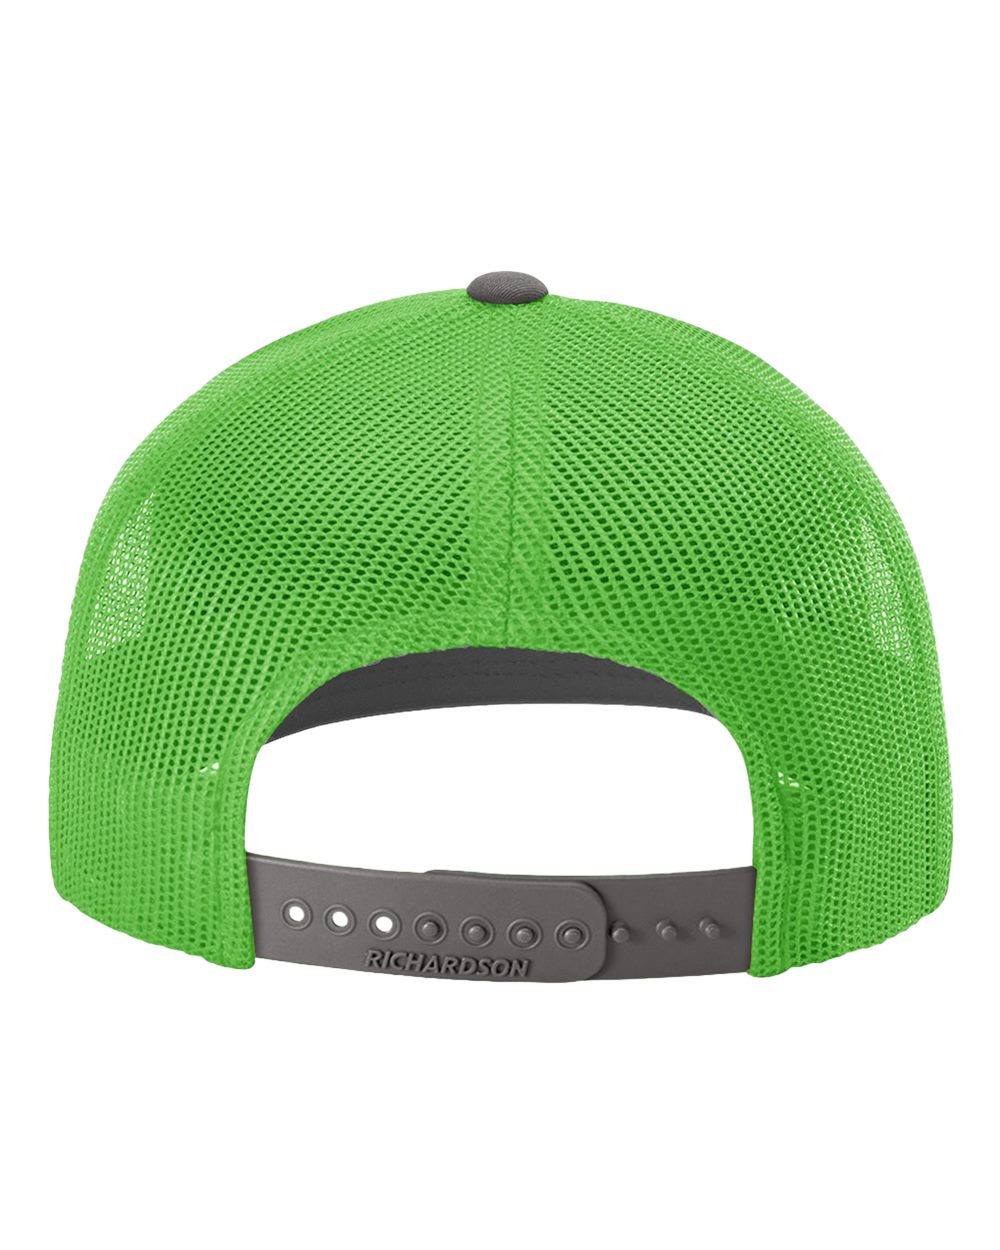 Richardson Adjustable Customized Snapback Trucker Caps, Charcoal Neon Green